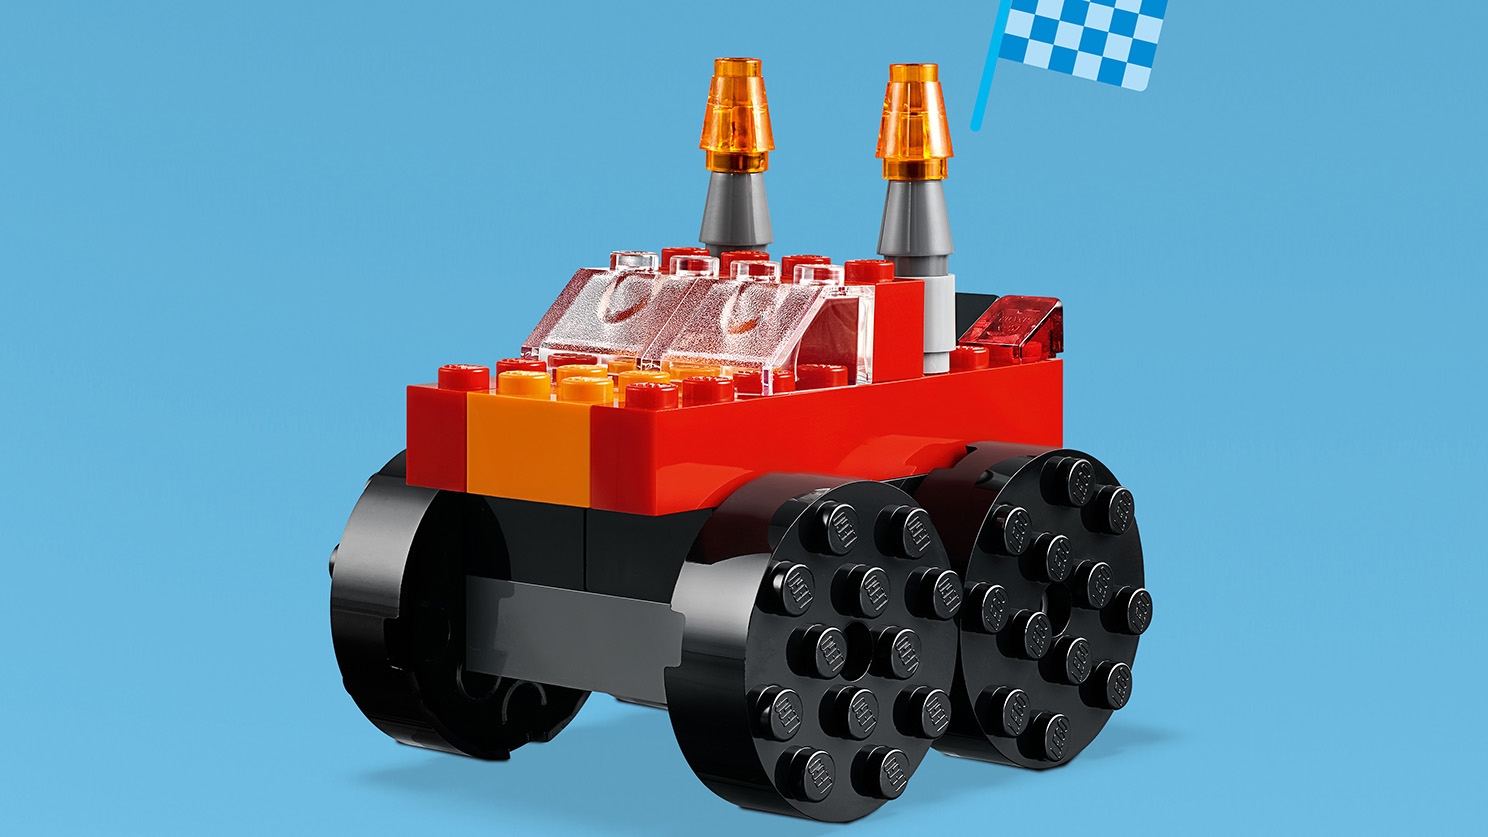 Basic Brick 11002 - Classic Sets - LEGO.com for kids